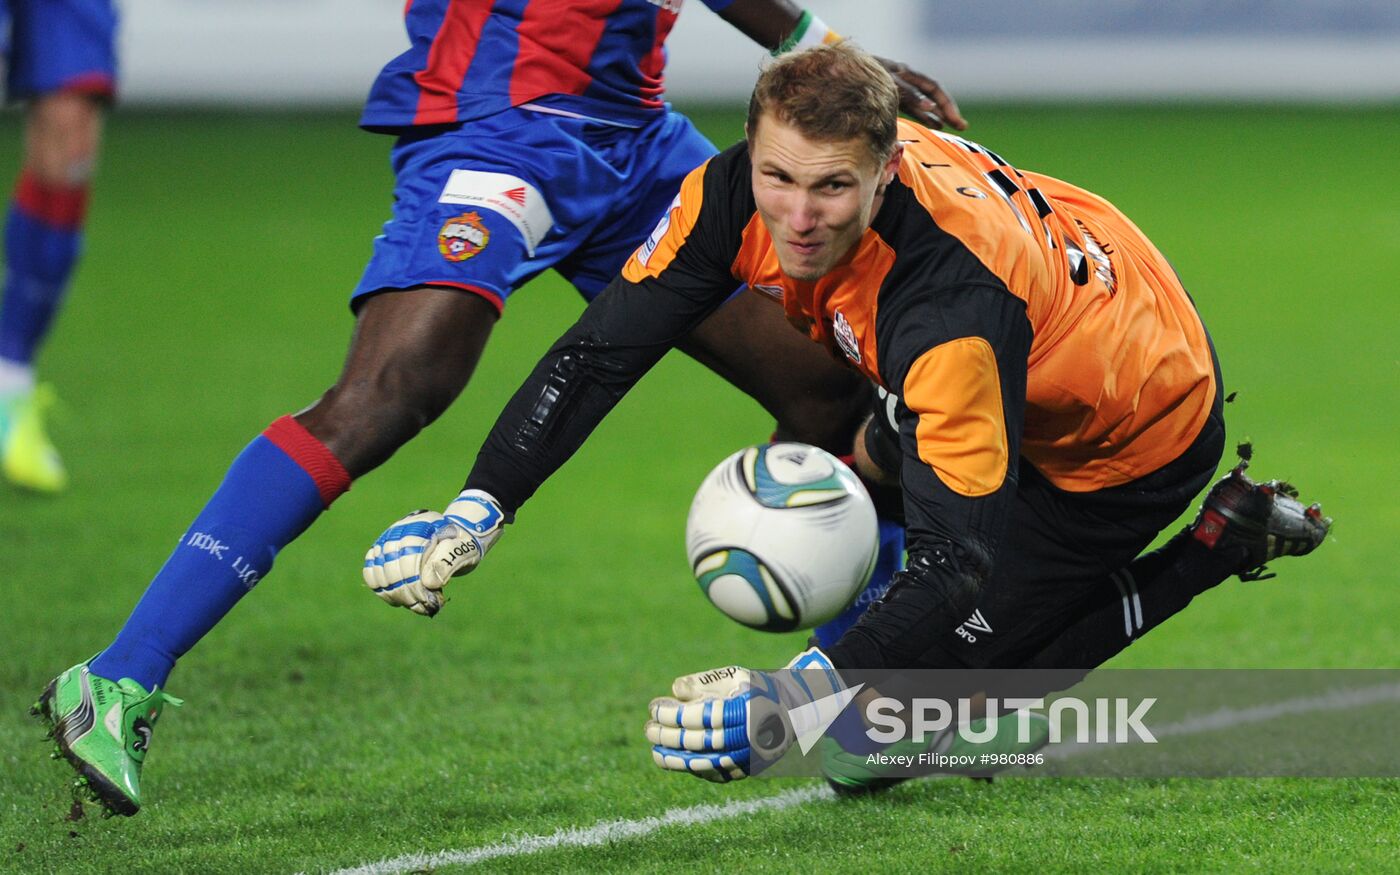 Russian Football Premier League. CSKA Moscow vs. Spartak Nalchik